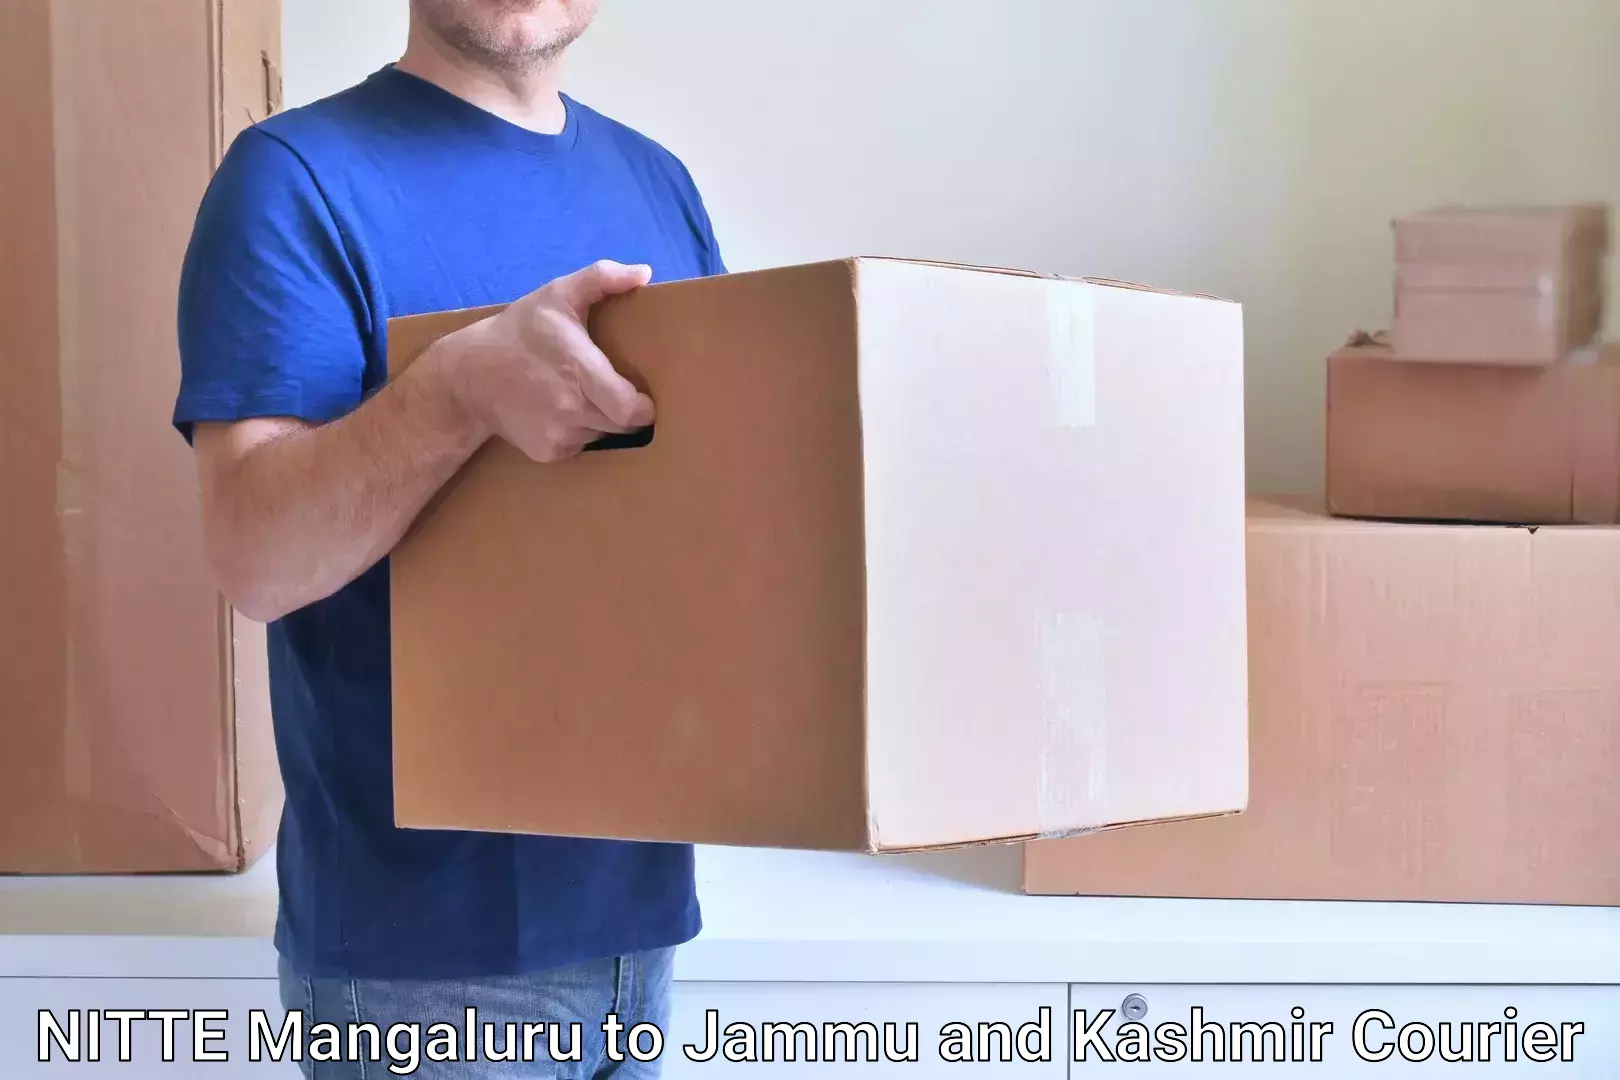 Reliable package handling NITTE Mangaluru to University of Jammu